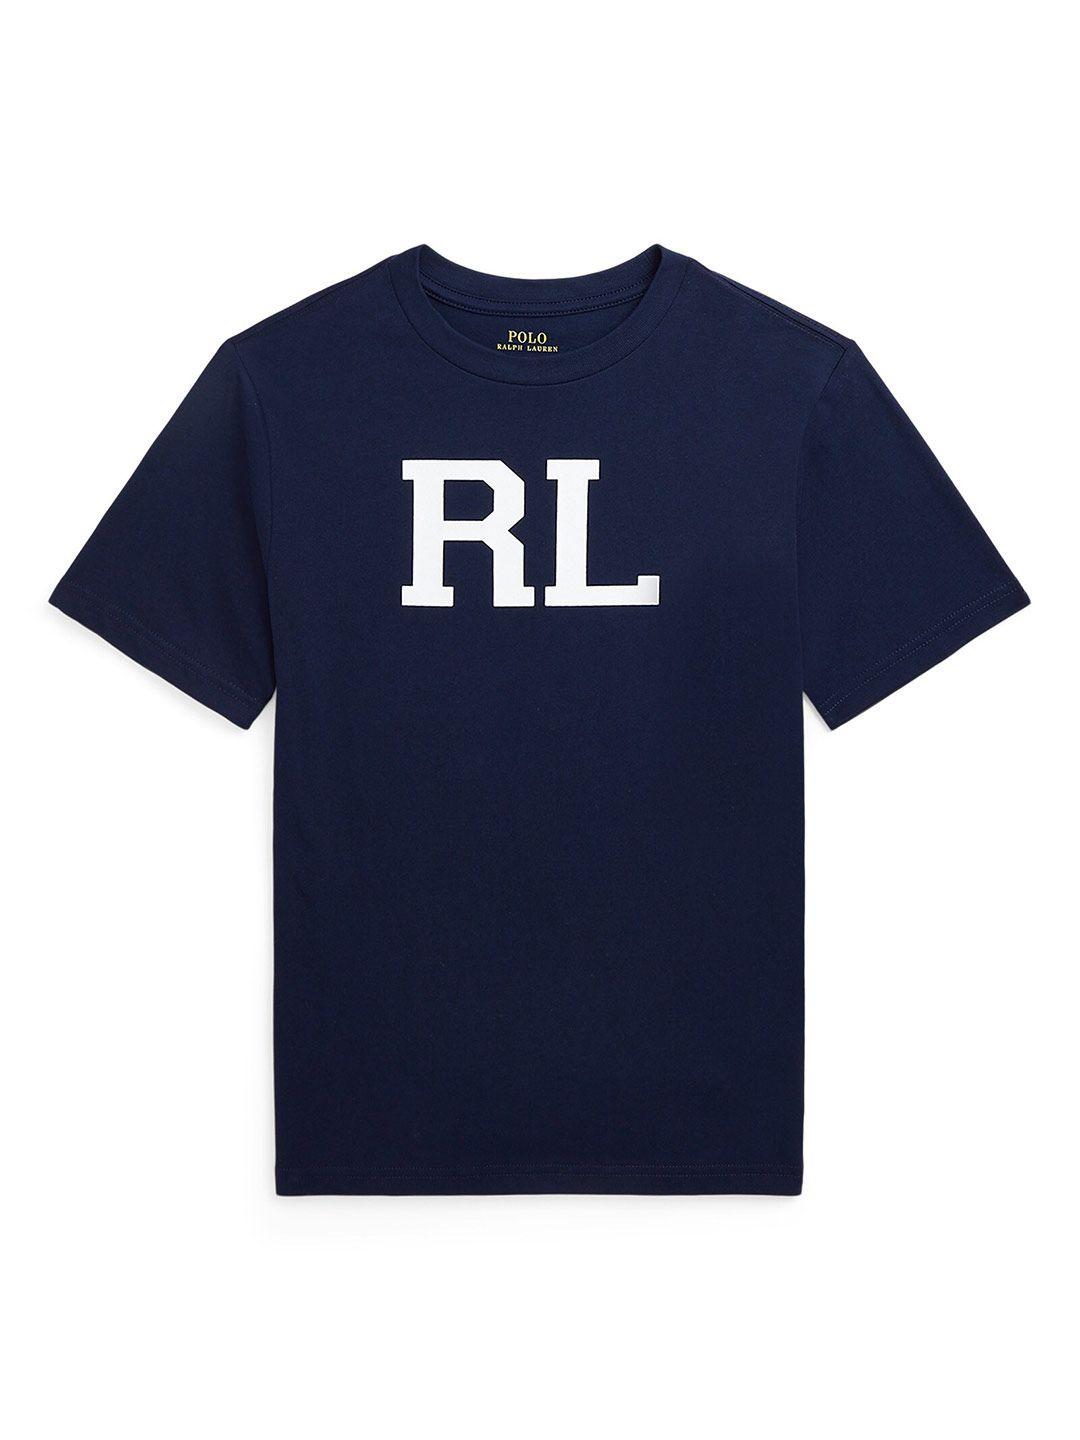 polo ralph lauren boys brand logo printed cotton t-shirt